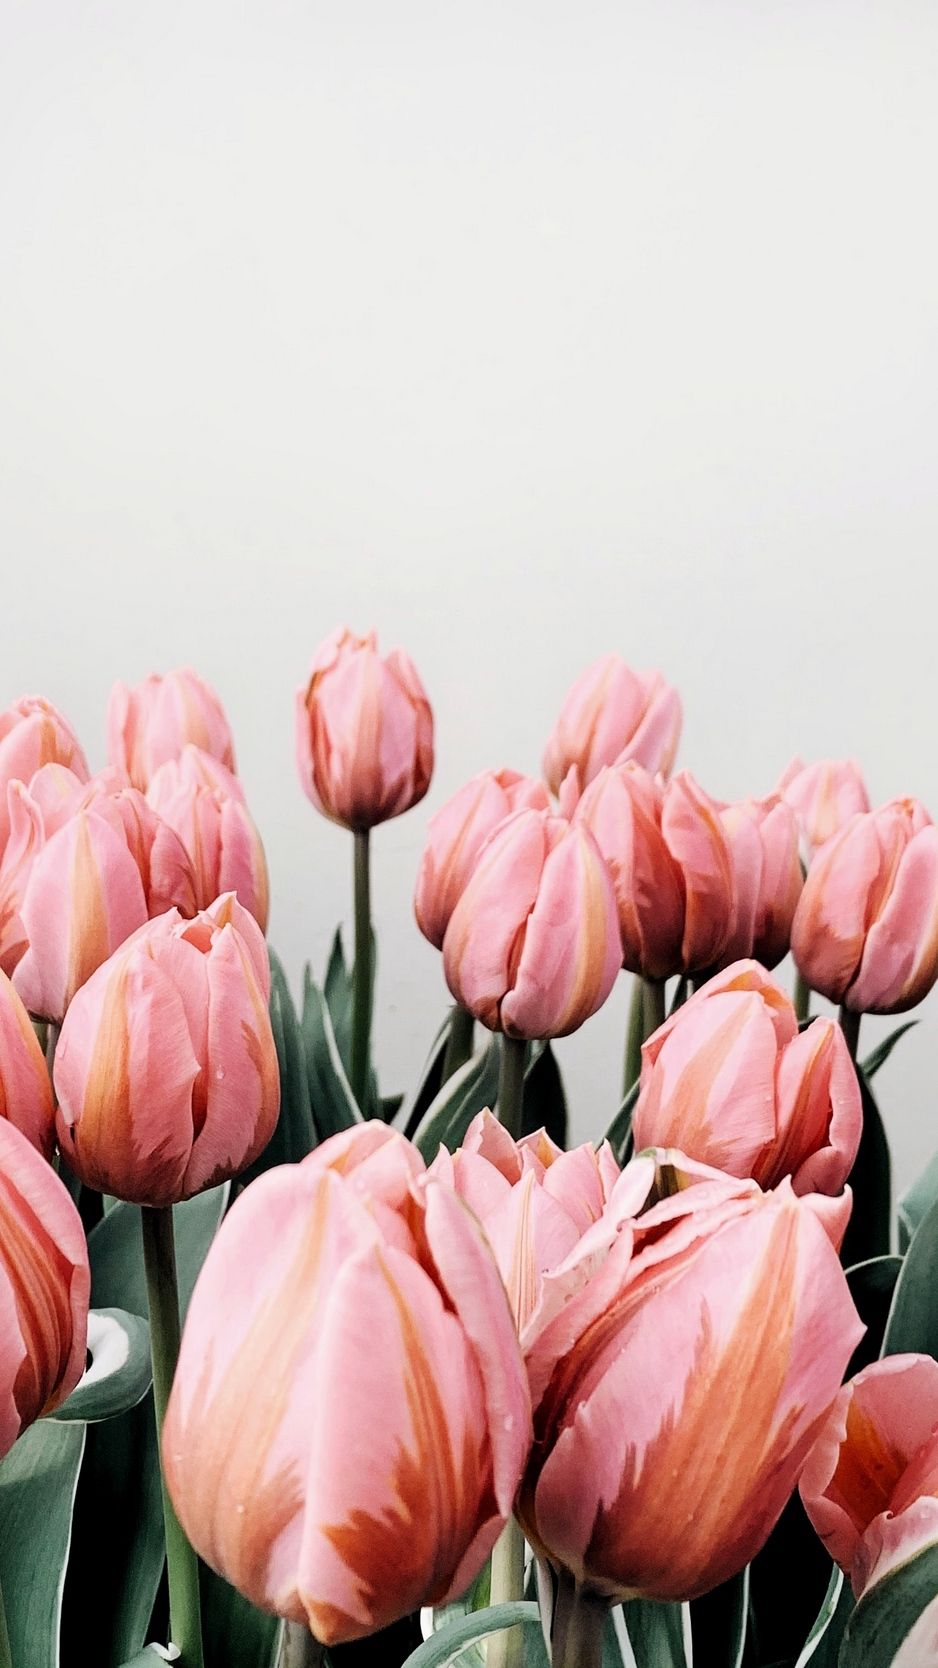 Download wallpaper 938x1668 tulips, flowers, pink, bloom iphone 8